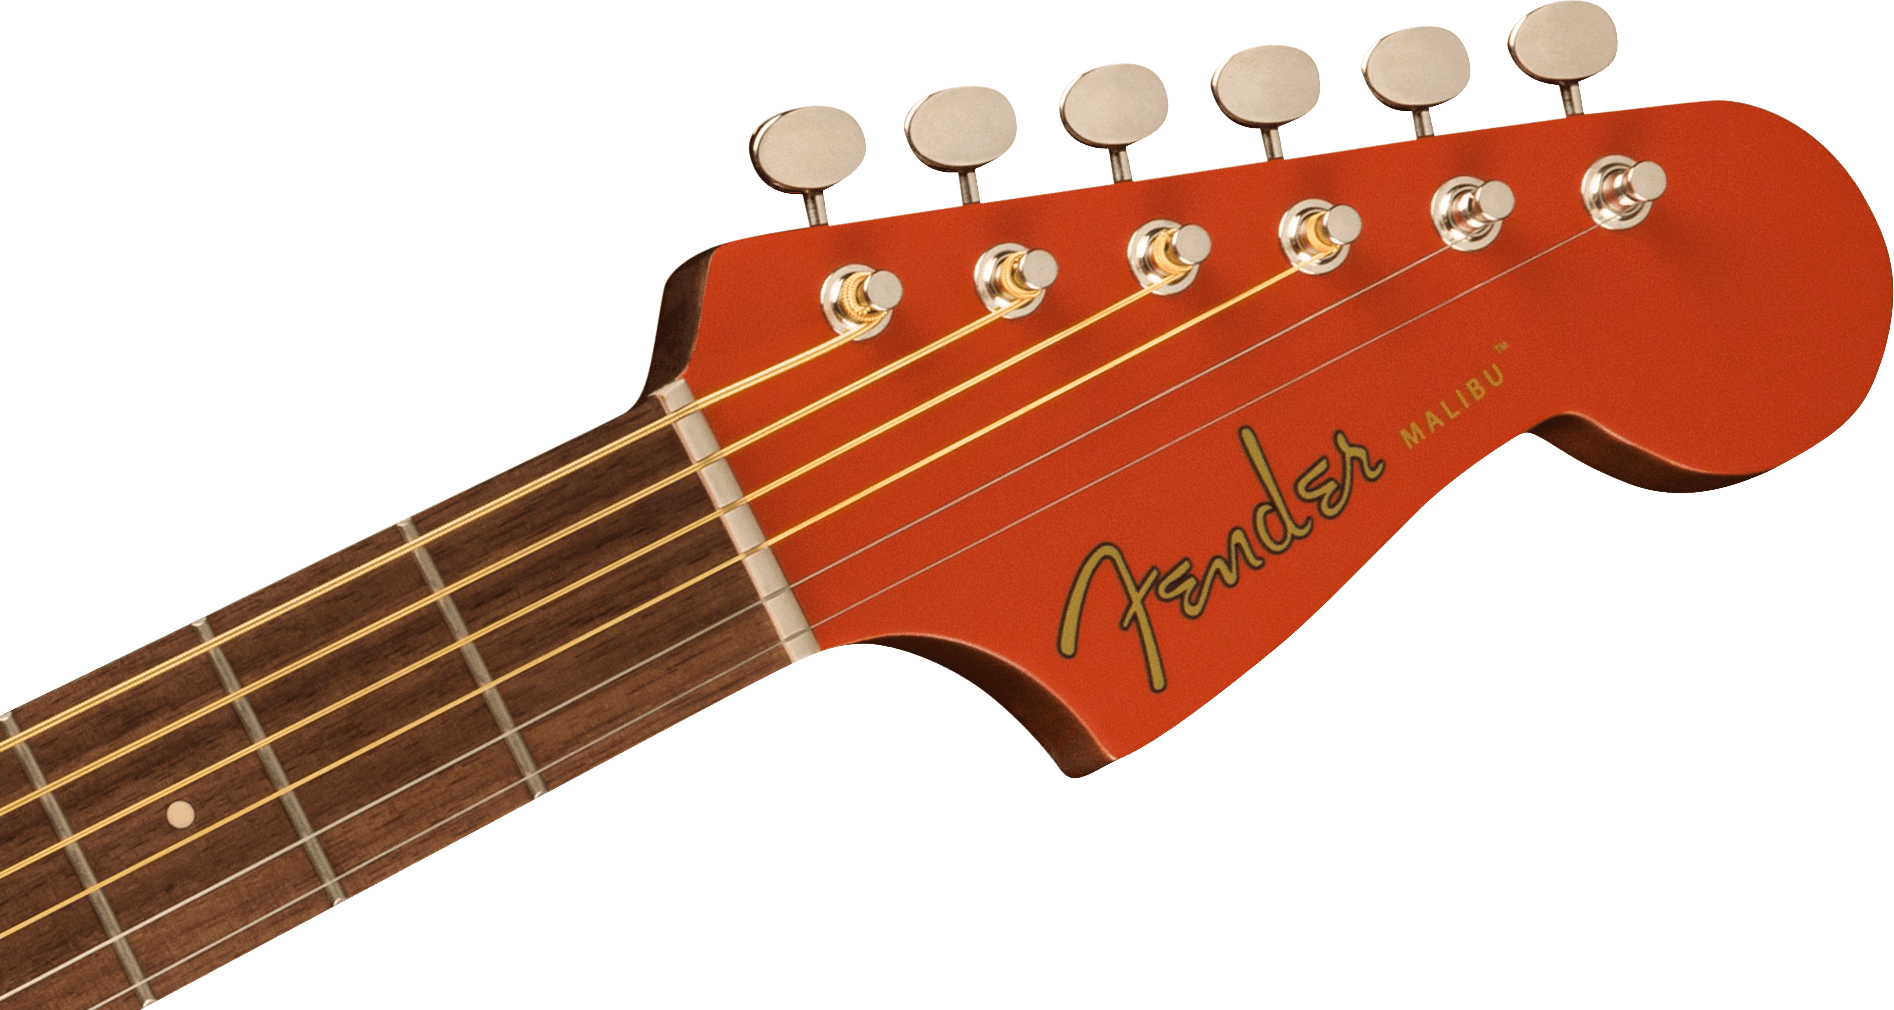 Malibu Player, Walnut Fingerboard, White Pickguard, Fiesta Red - Guitars - Electro-Acoustic by Fender at Muso's Stuff